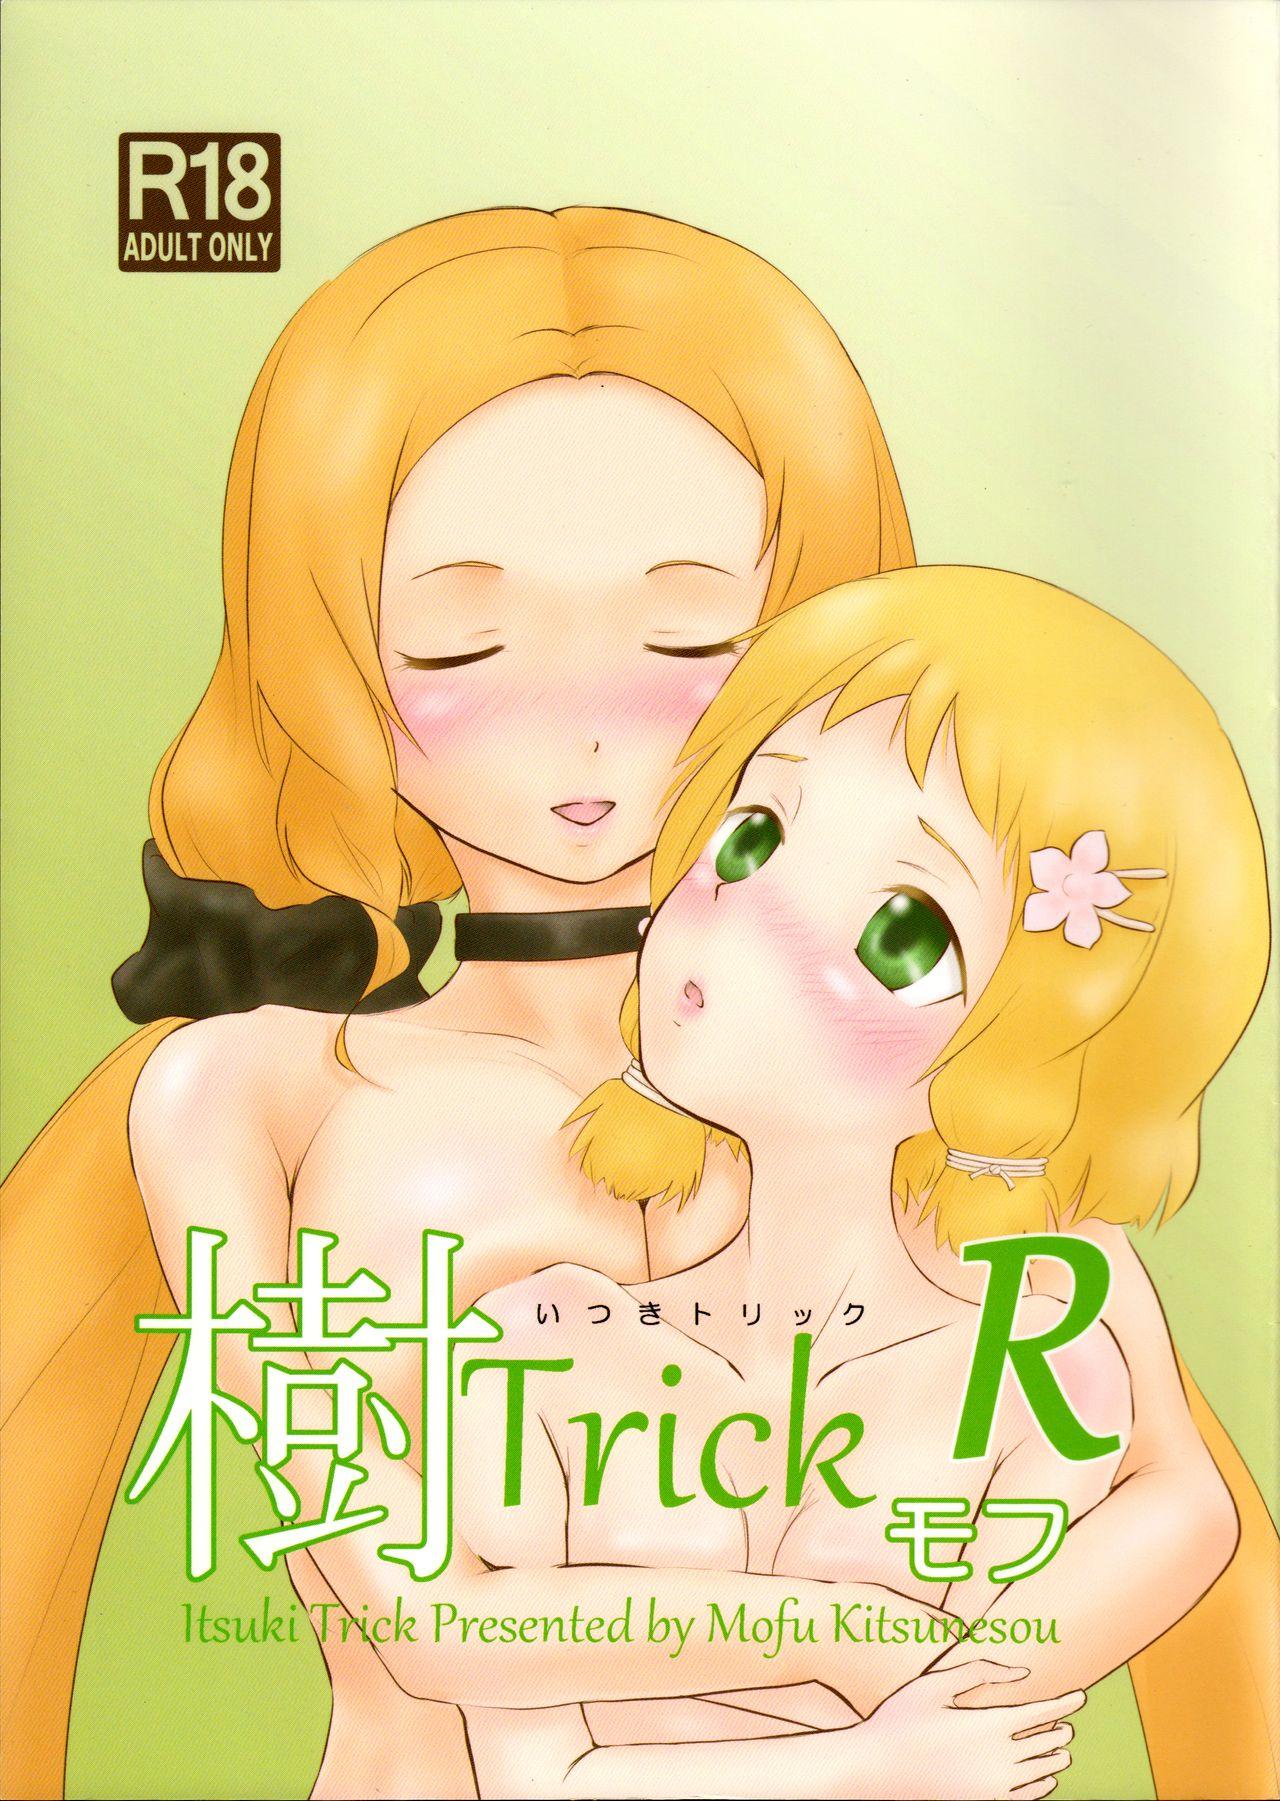 Itsuki Trick R 1